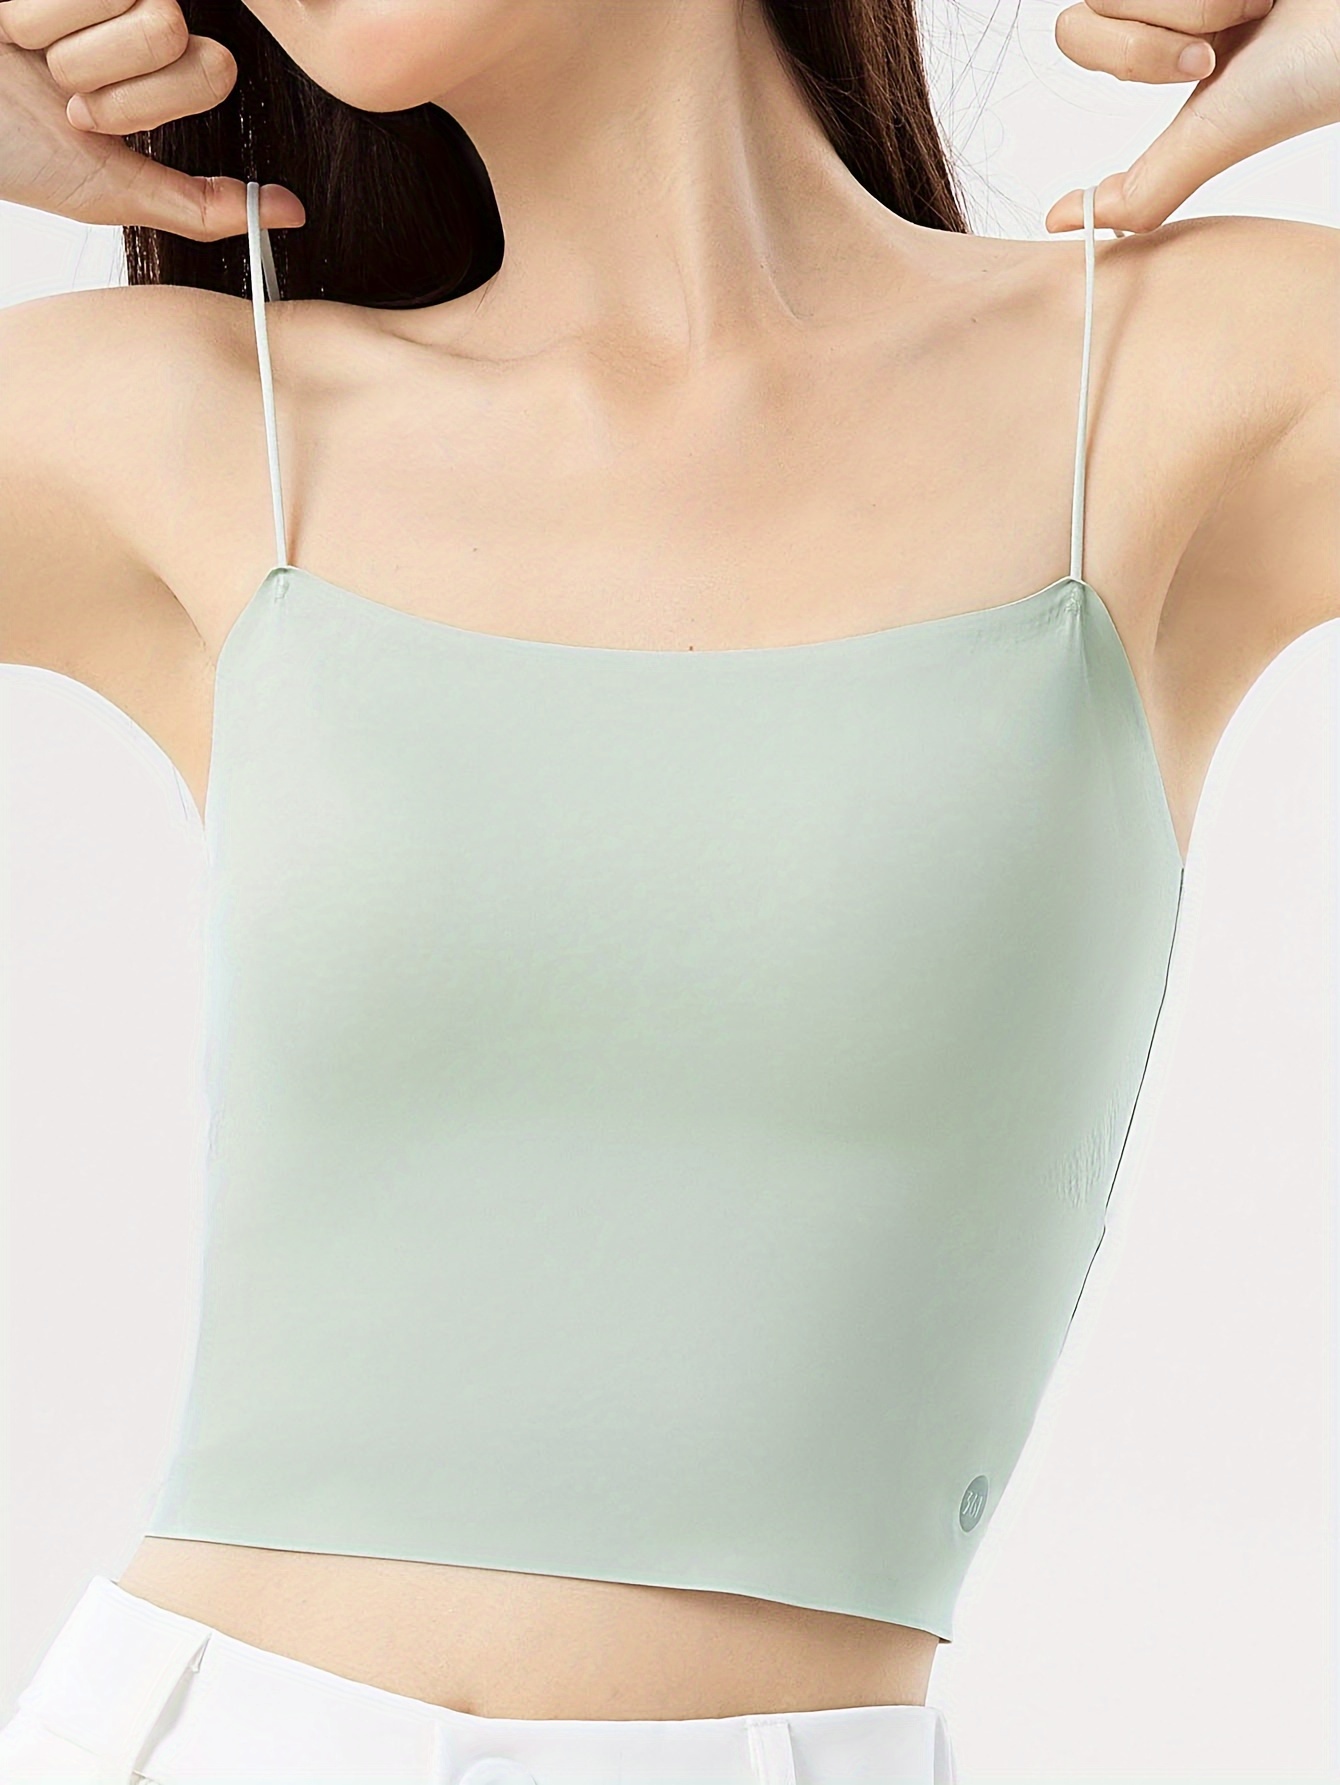 Women Solid Cami Crop Tank Top T-Shirt Racer Back Spaghetti Strap Yoga Vest